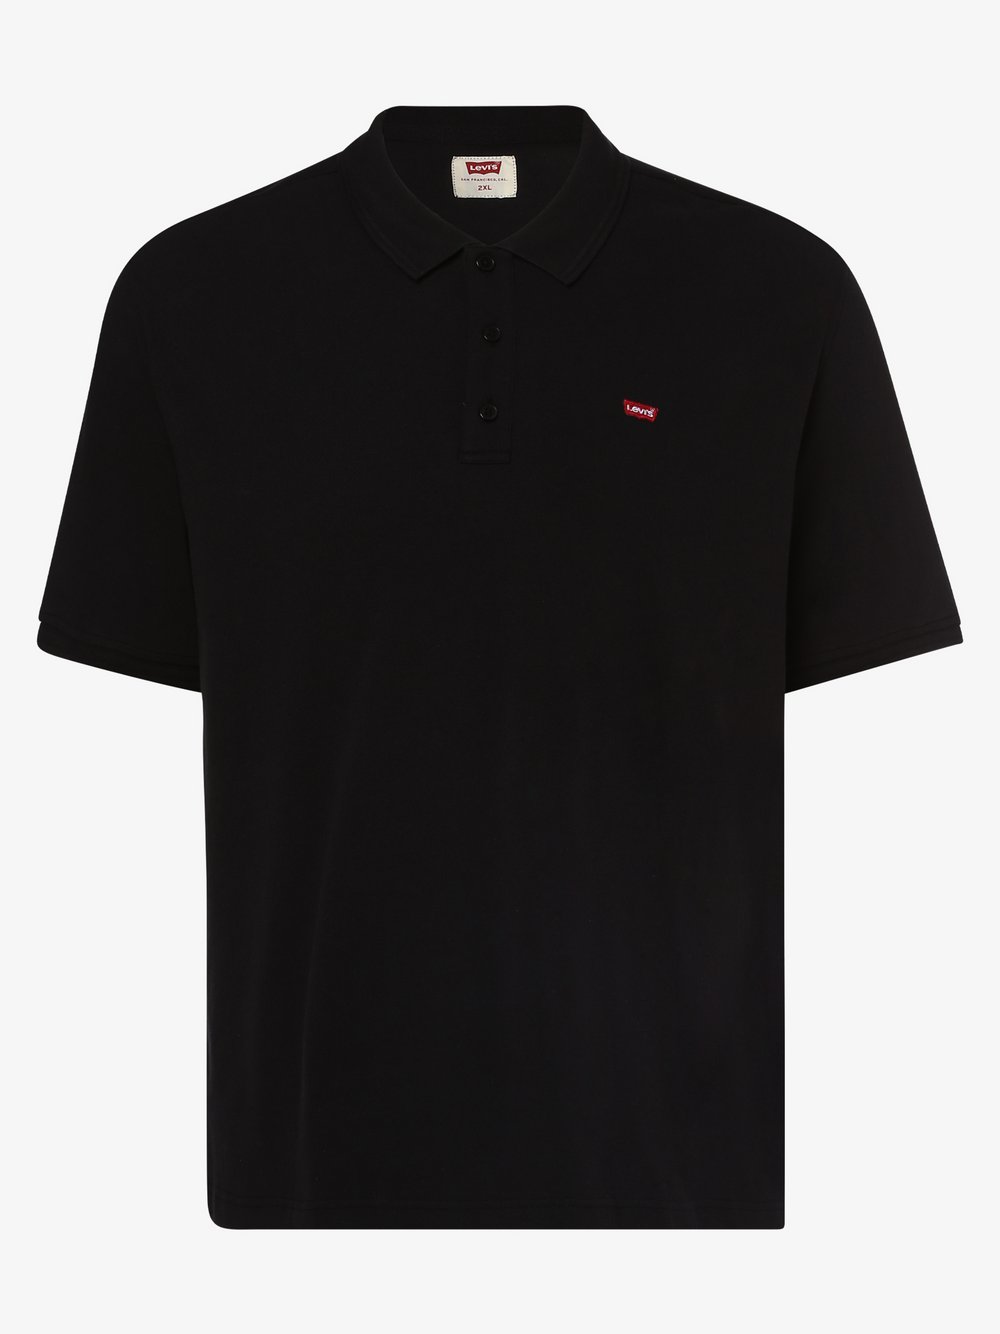 Levi's - Męska koszulka polo – duże rozmiary, czarny